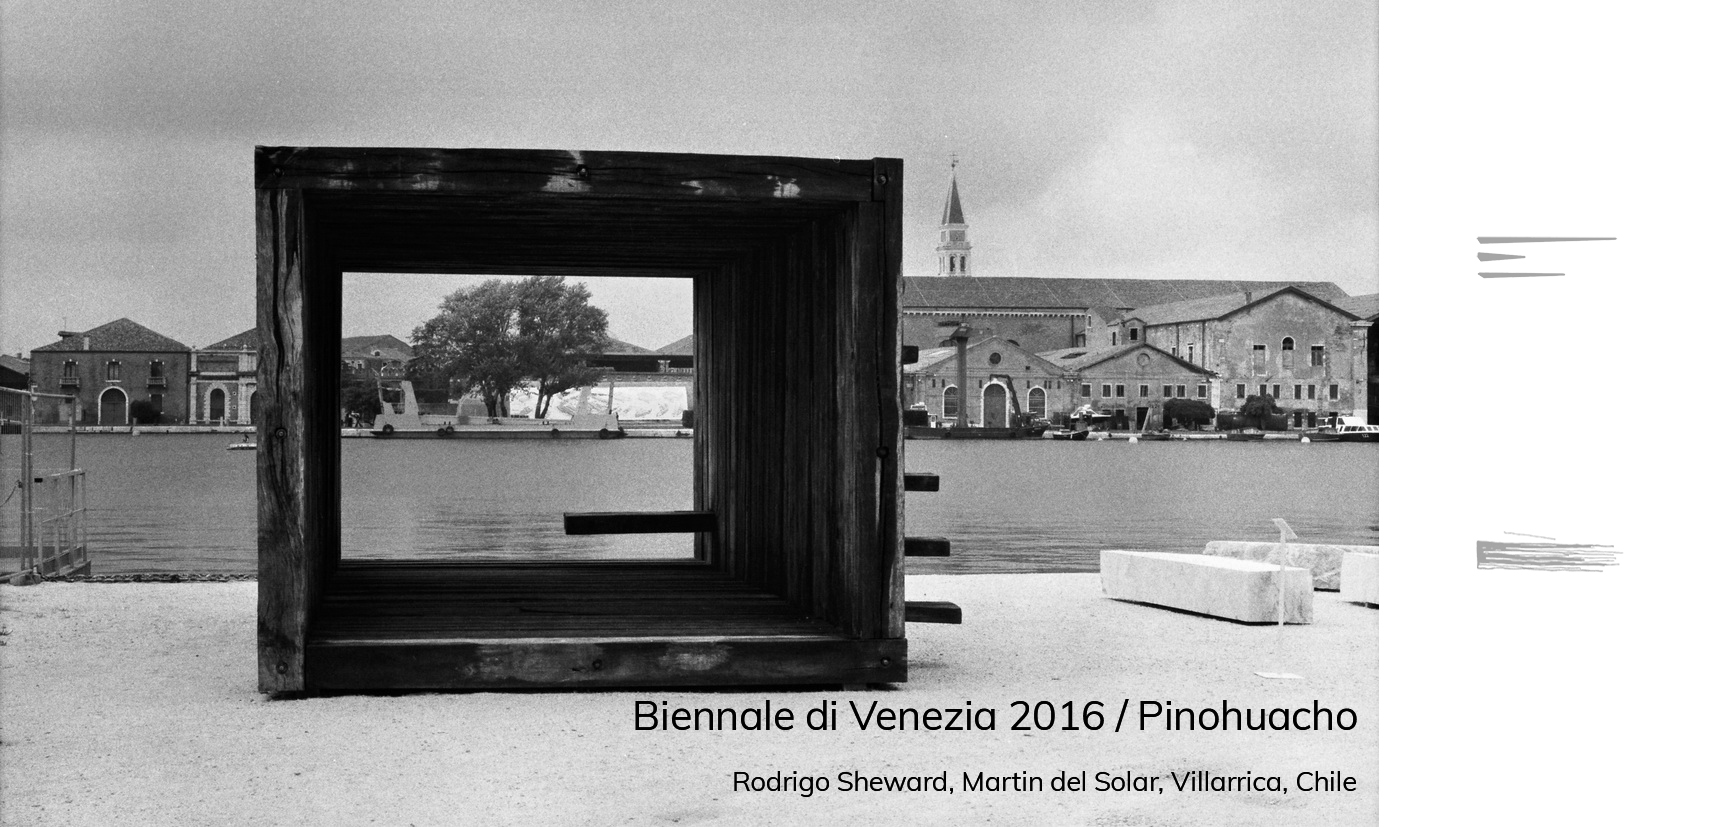 Biennale di Venezia 2016 / Pinohuacho